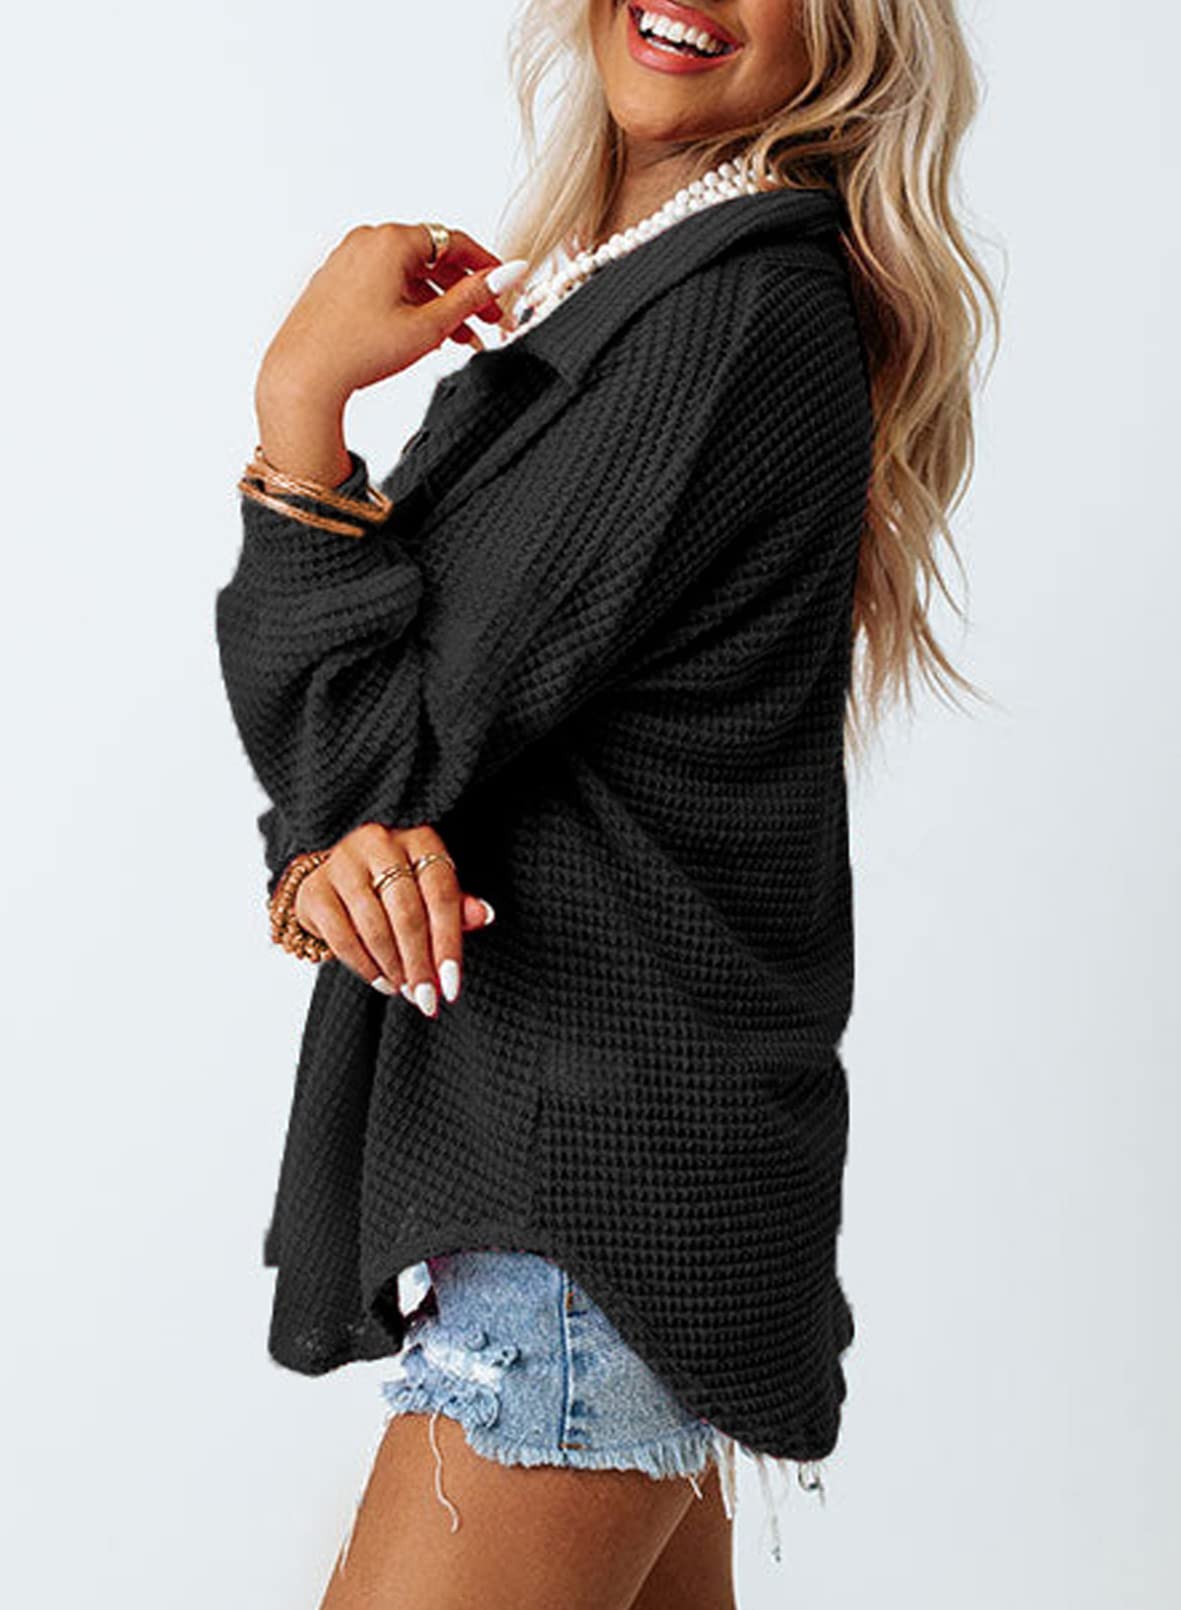 Dokotoo Womens Waffle Knit Shacket Jacket Casual Long Sleeve Button Down Shirts Dressy Blouses Tops